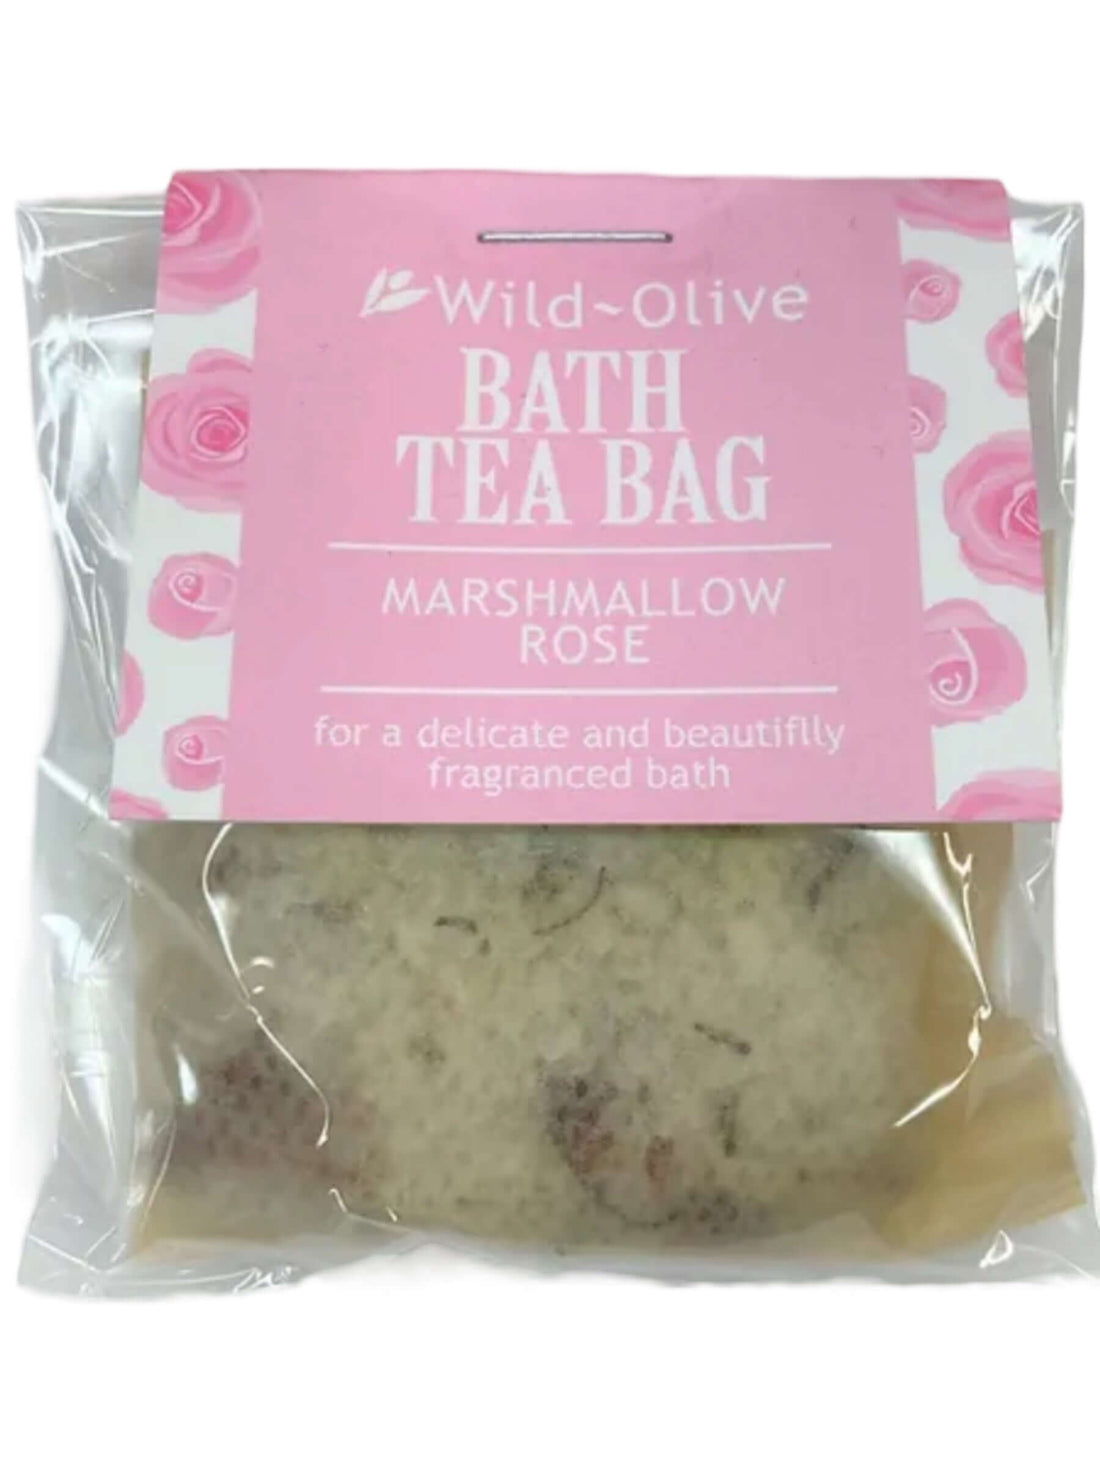 Marshmallow Rose Bath Tea Bag